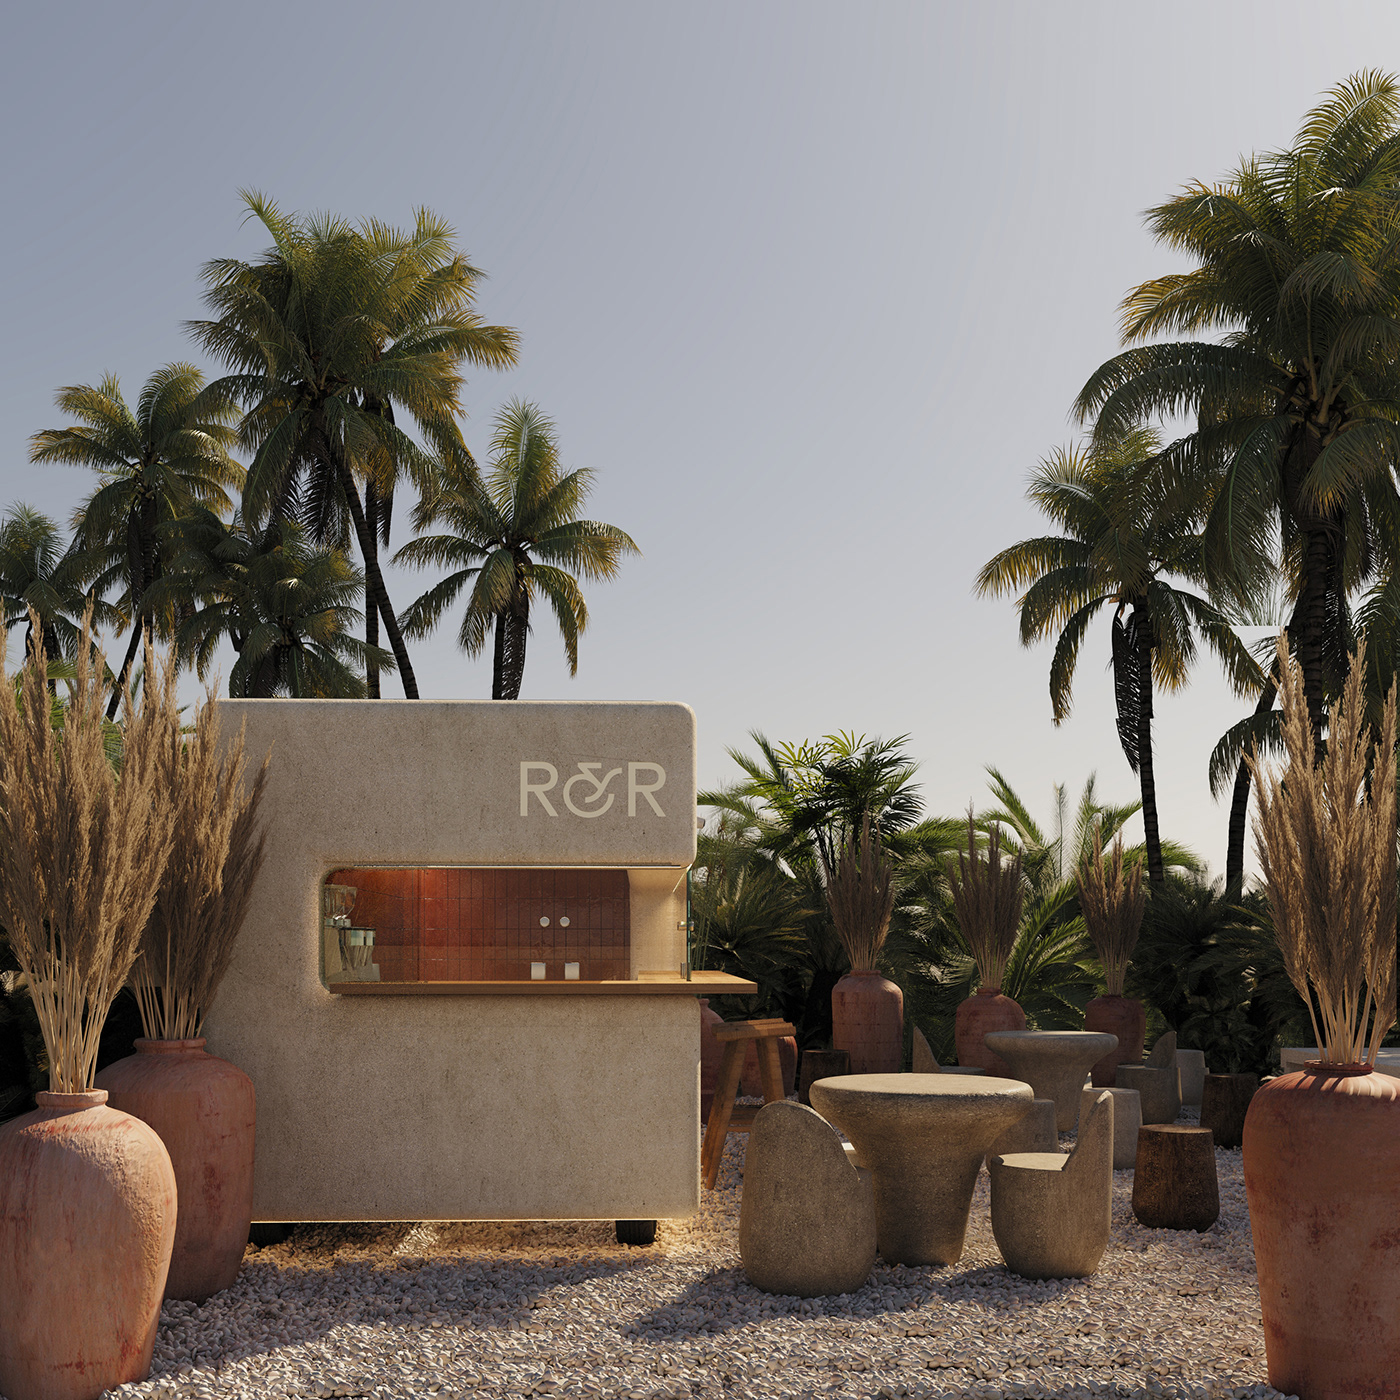 3ds max corona render  landscape visualization Architectural rendering archviz exterior CGI booth design Render hospitality design